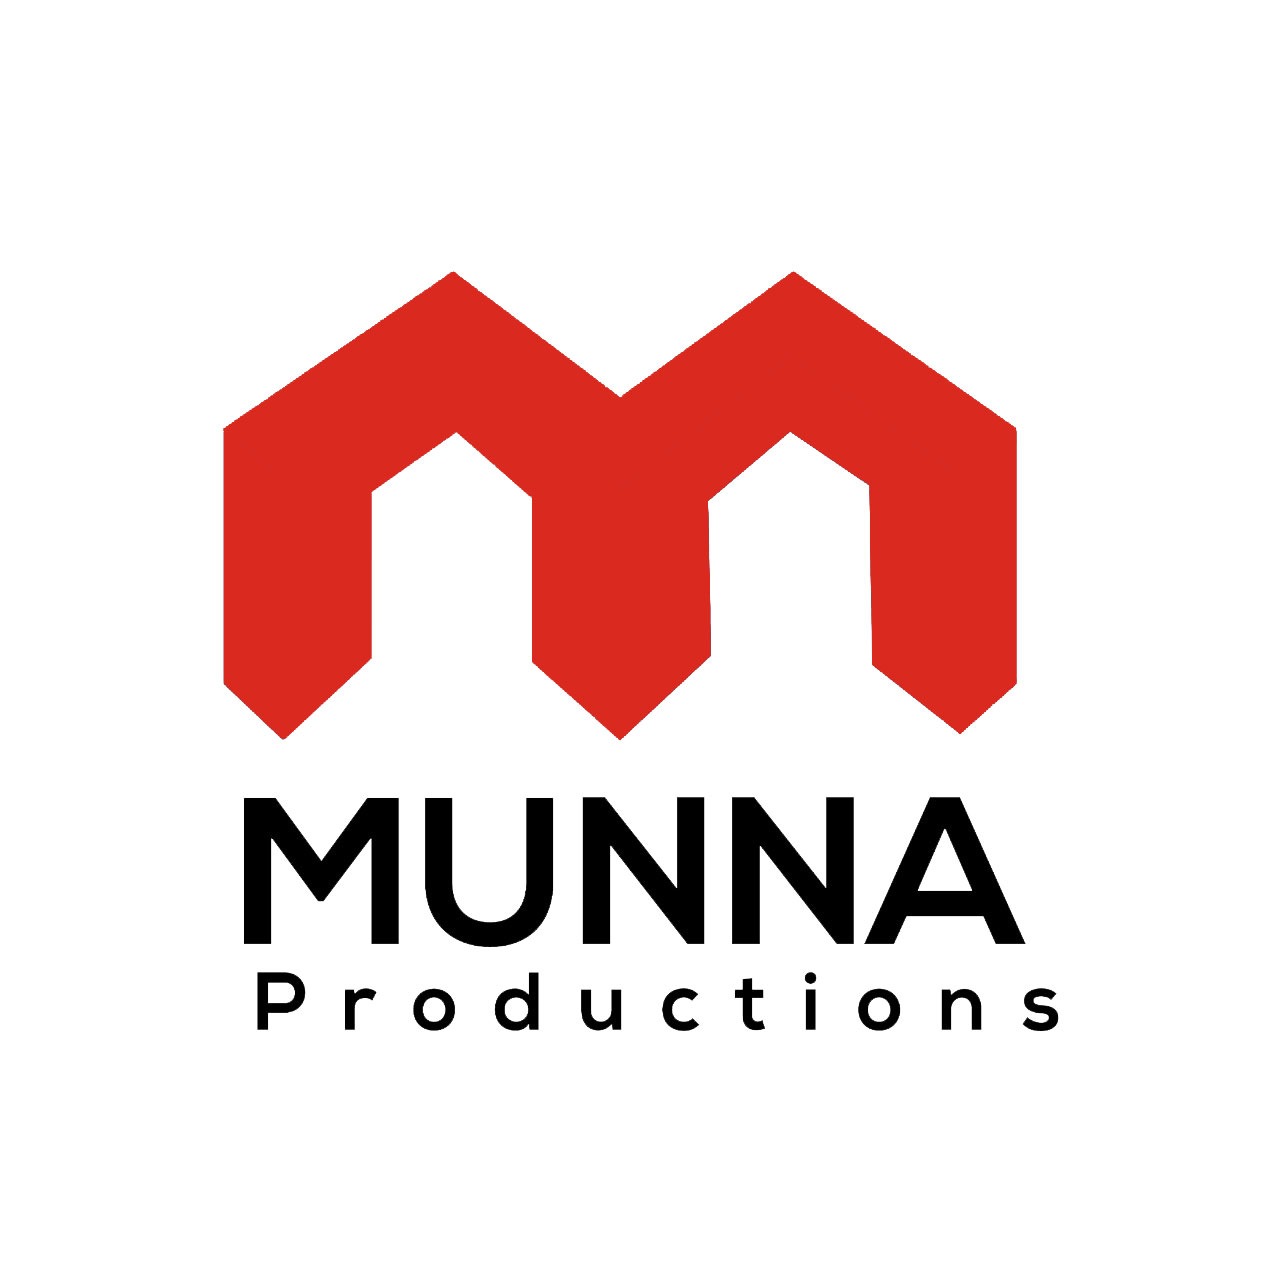 Munna Productions